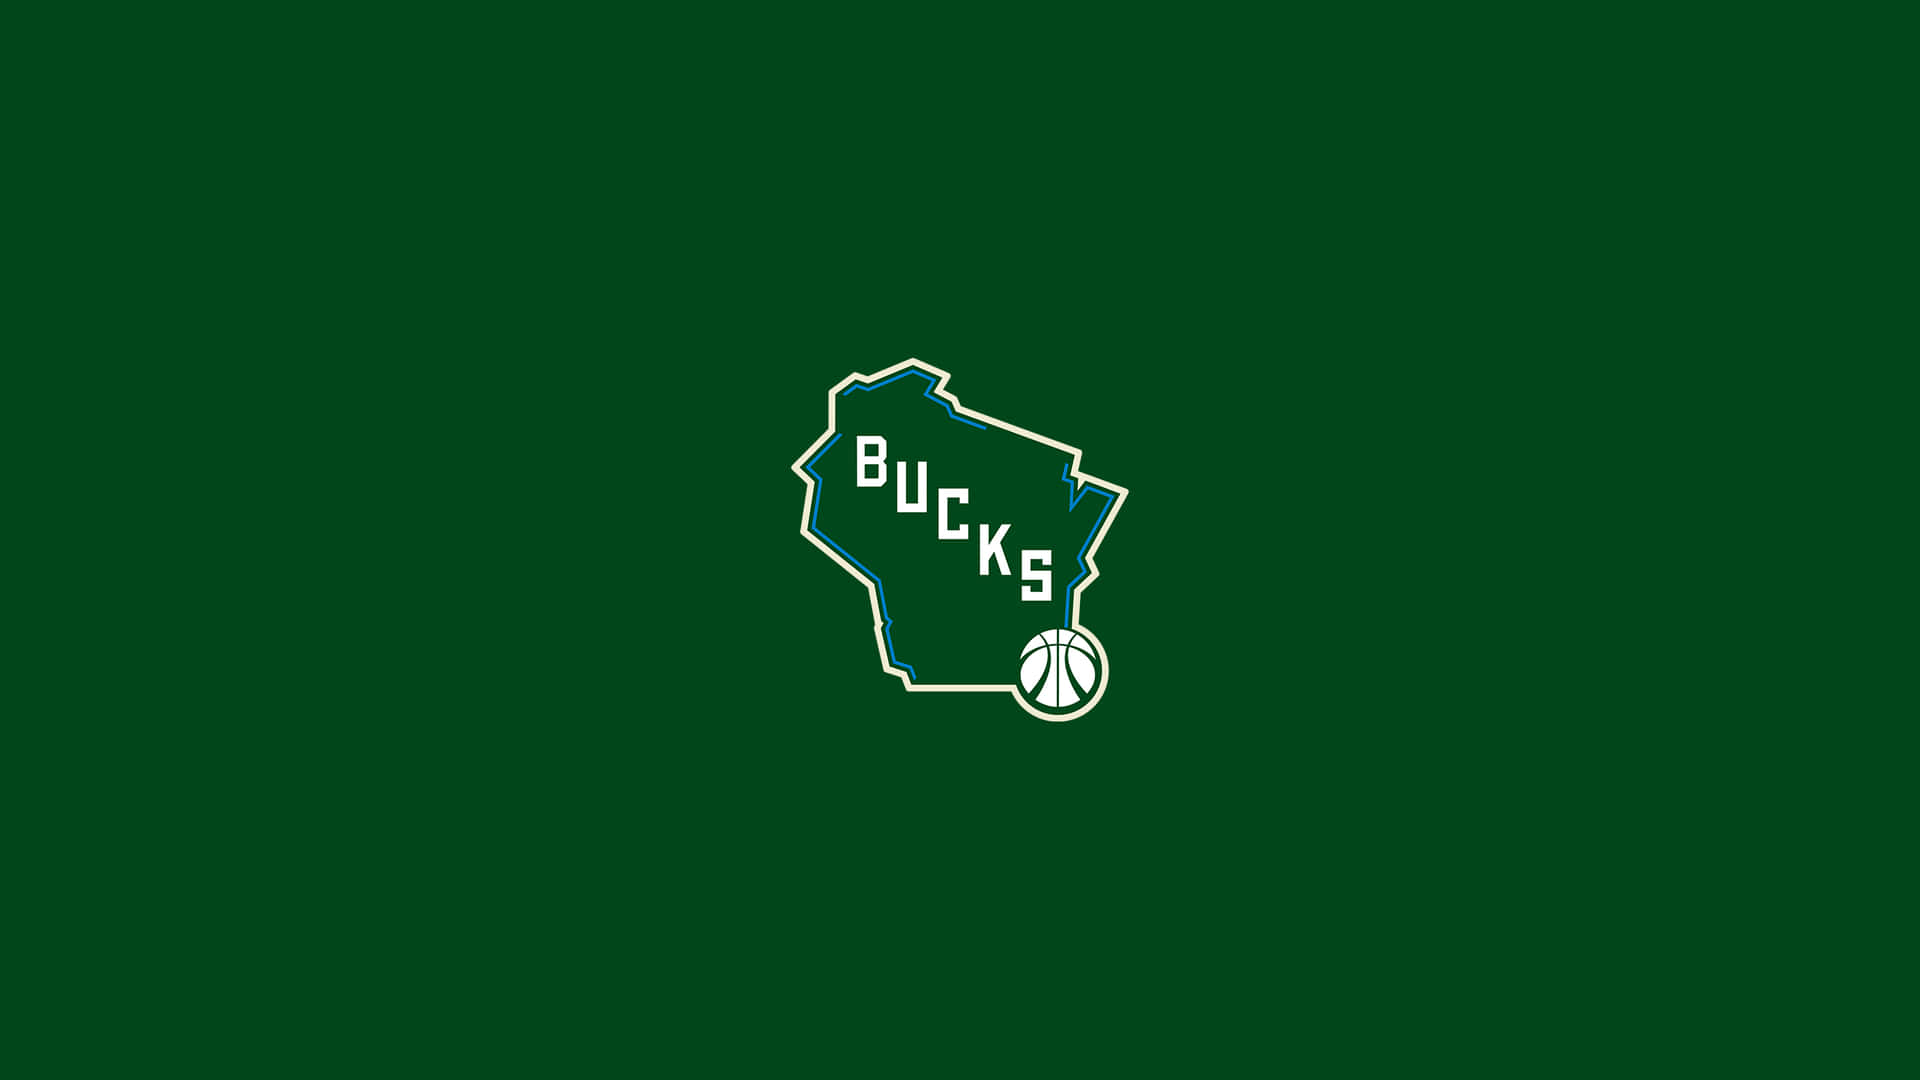 The official logo of the Milwaukee Bucks Wallpaper